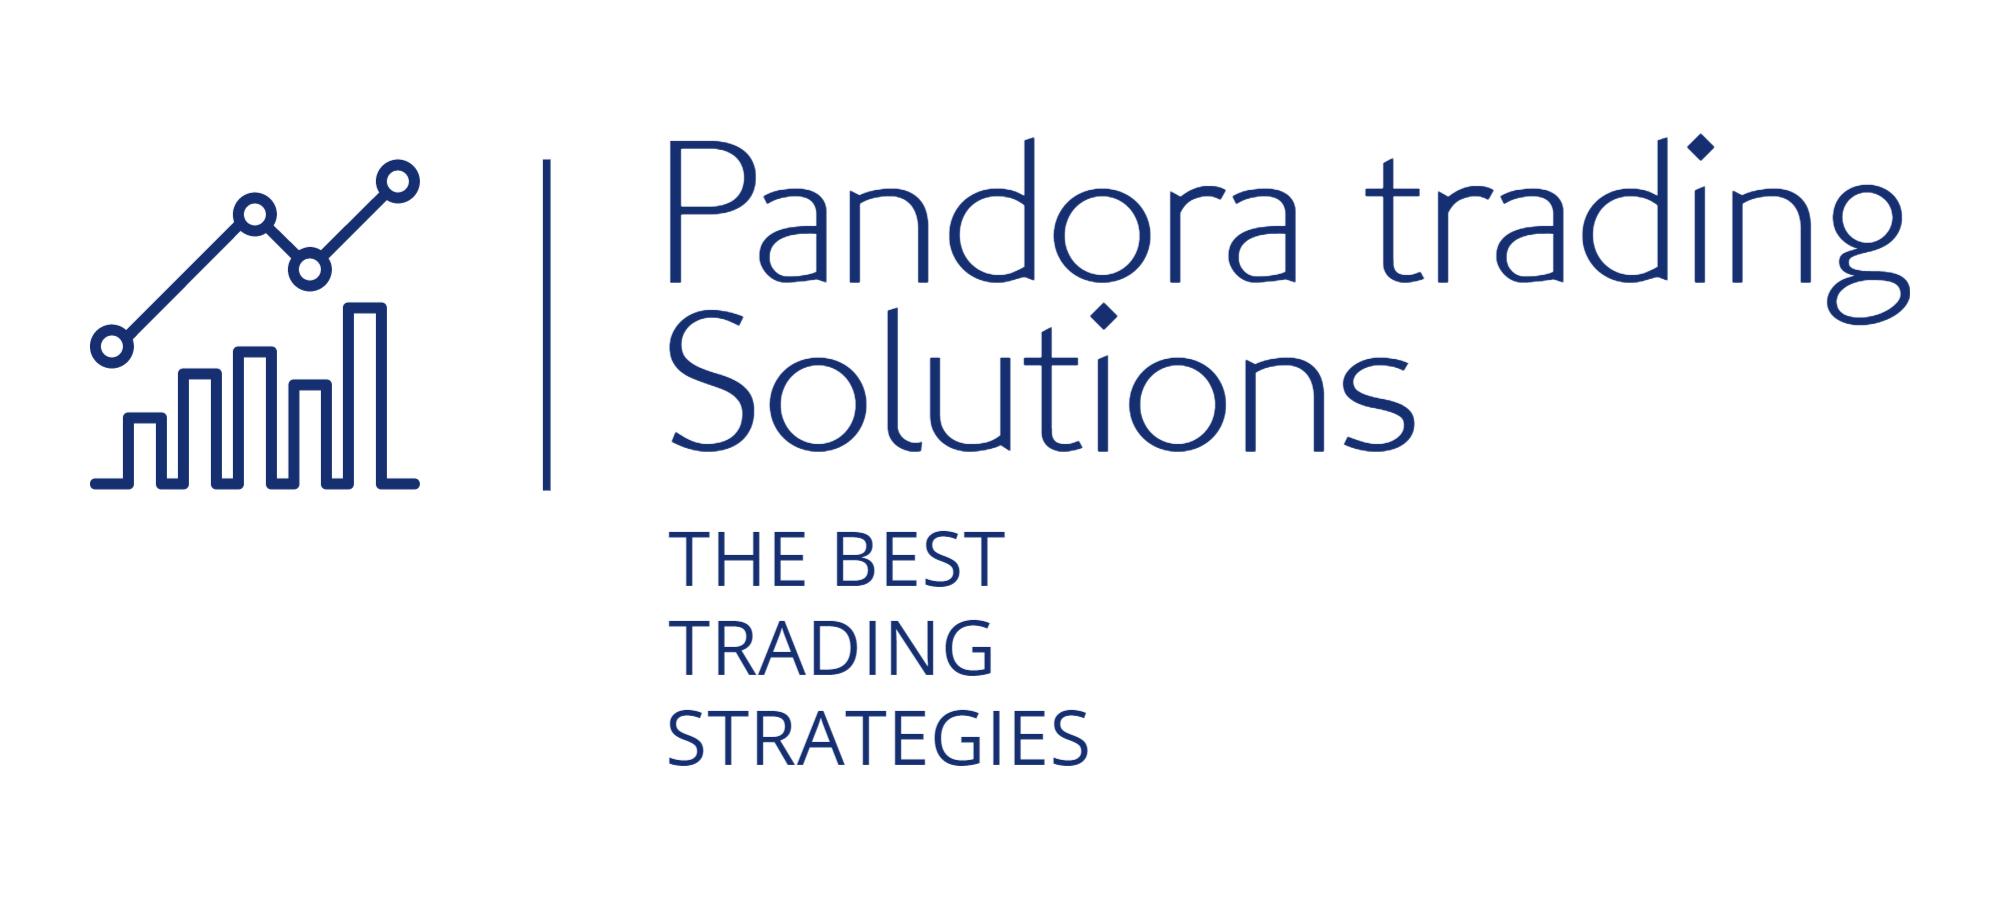 padnora trading solutions logo